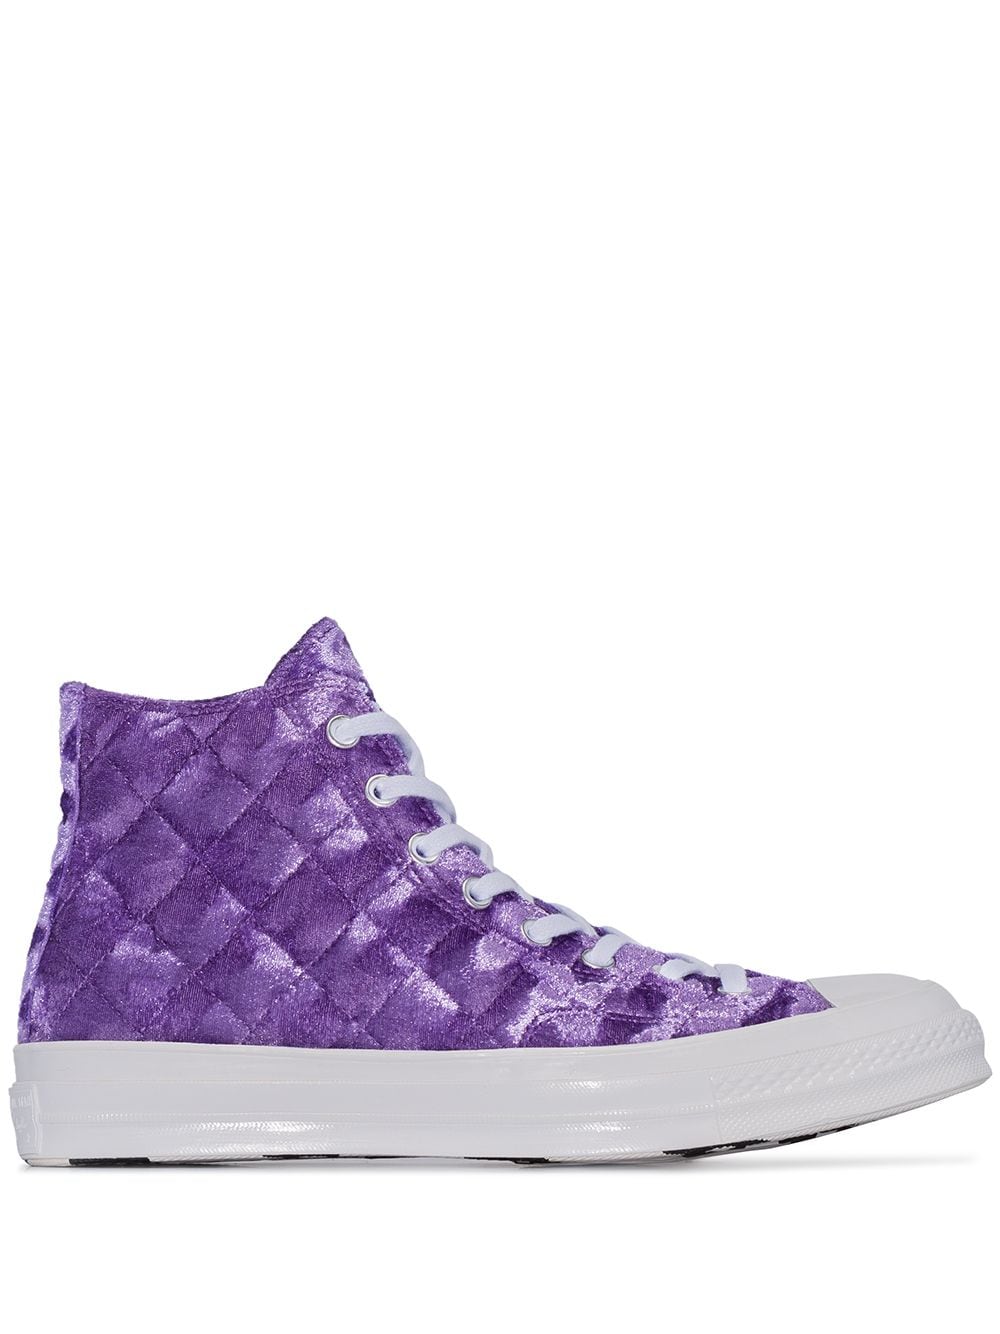 Converse Chuck 70 Hi "Quilted Velvet" sneakers - Purple von Converse